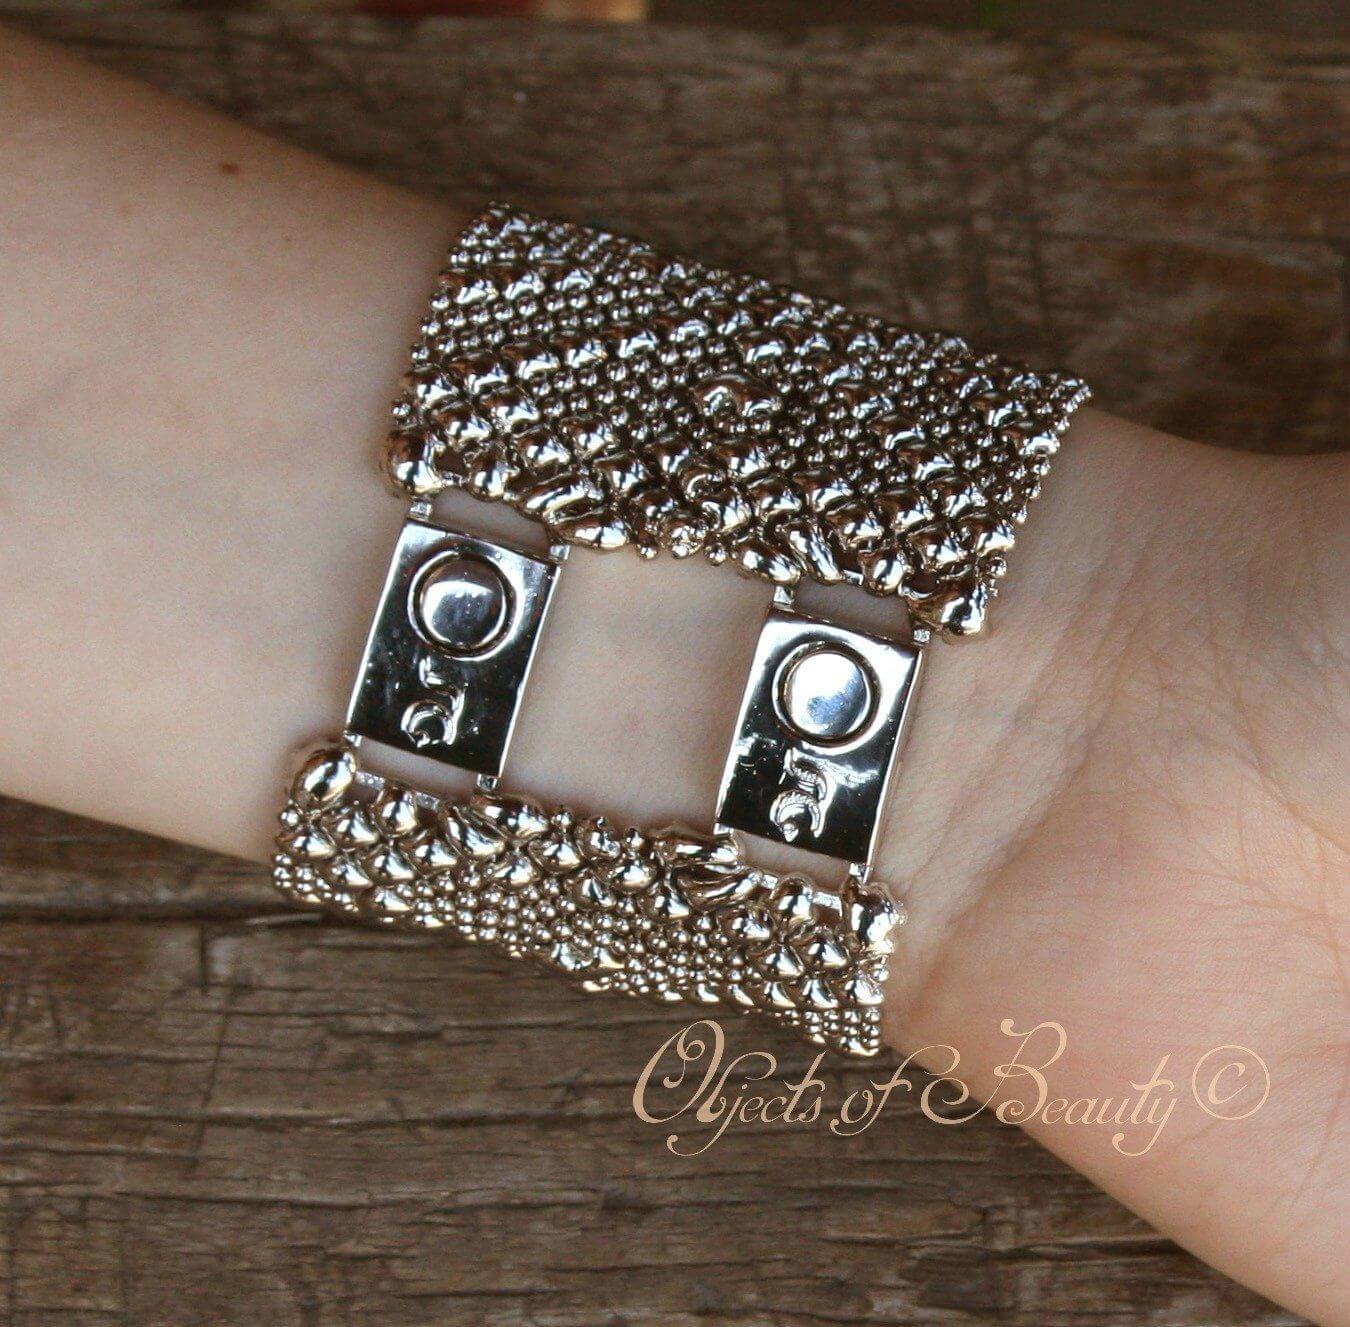 Boho Stacking Bracelets in Sterling Silver by HappyGoLicky Jewelry